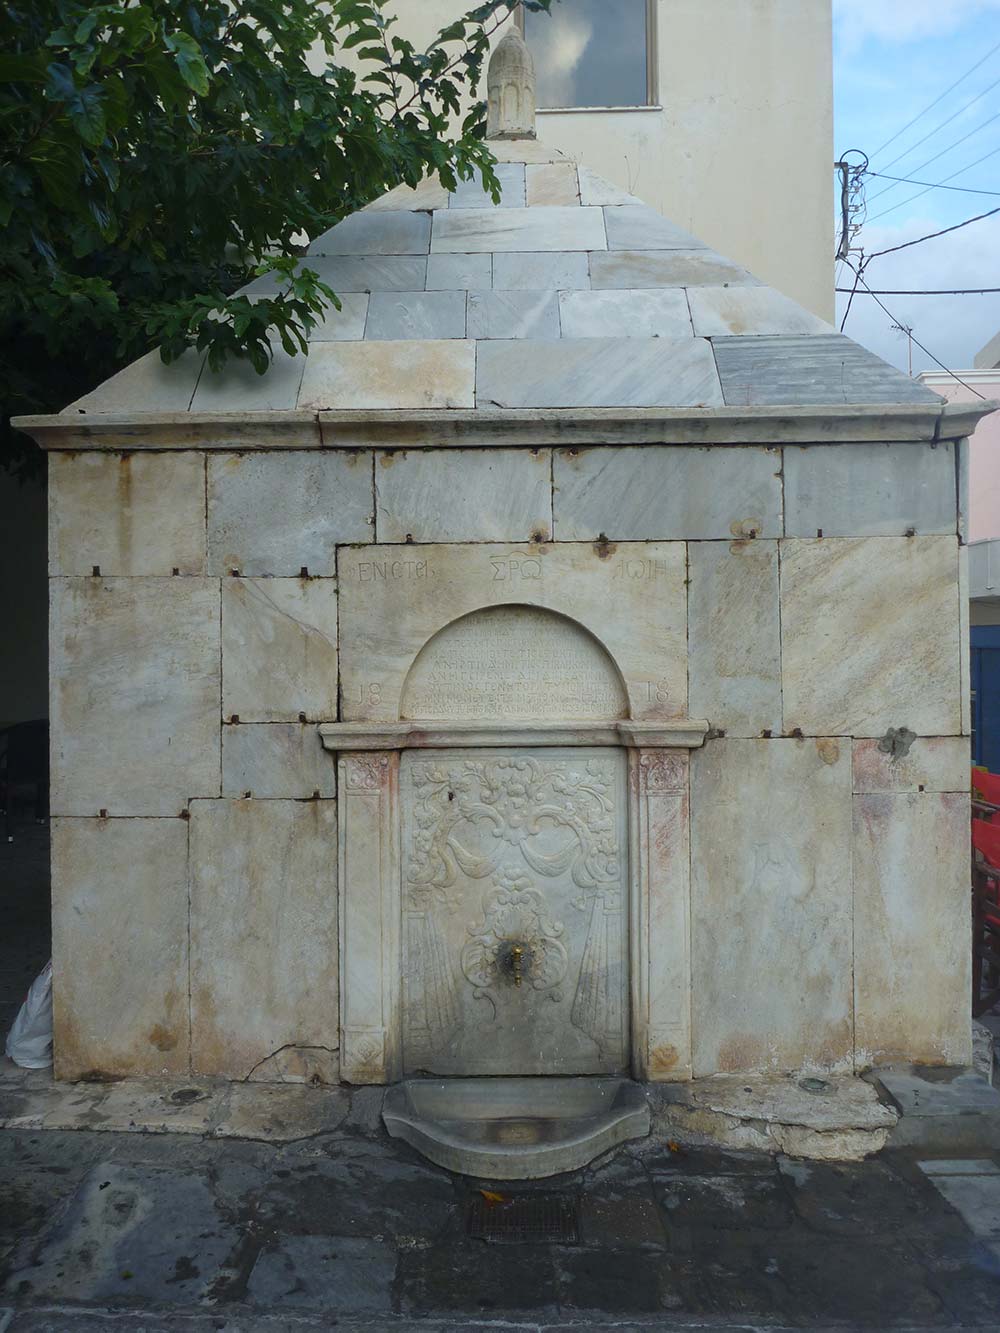 An old Turkish drinking fountain